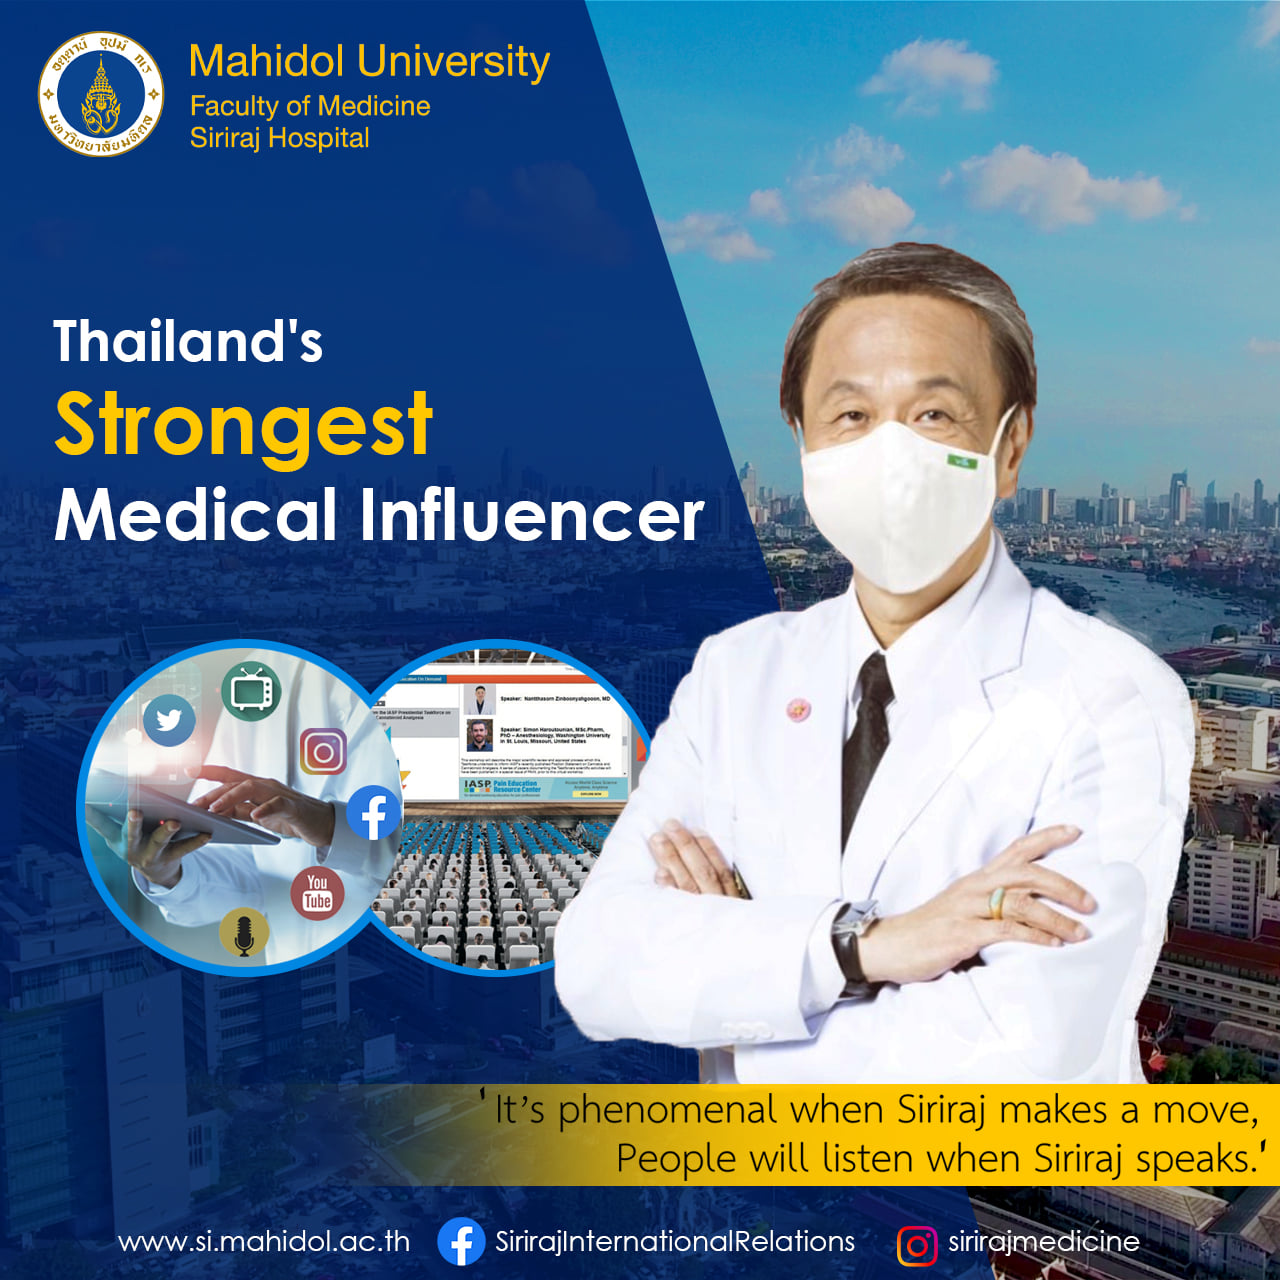 SIRIRAJ HOSPITAL – Thailand’s Strongest Medical Influencer